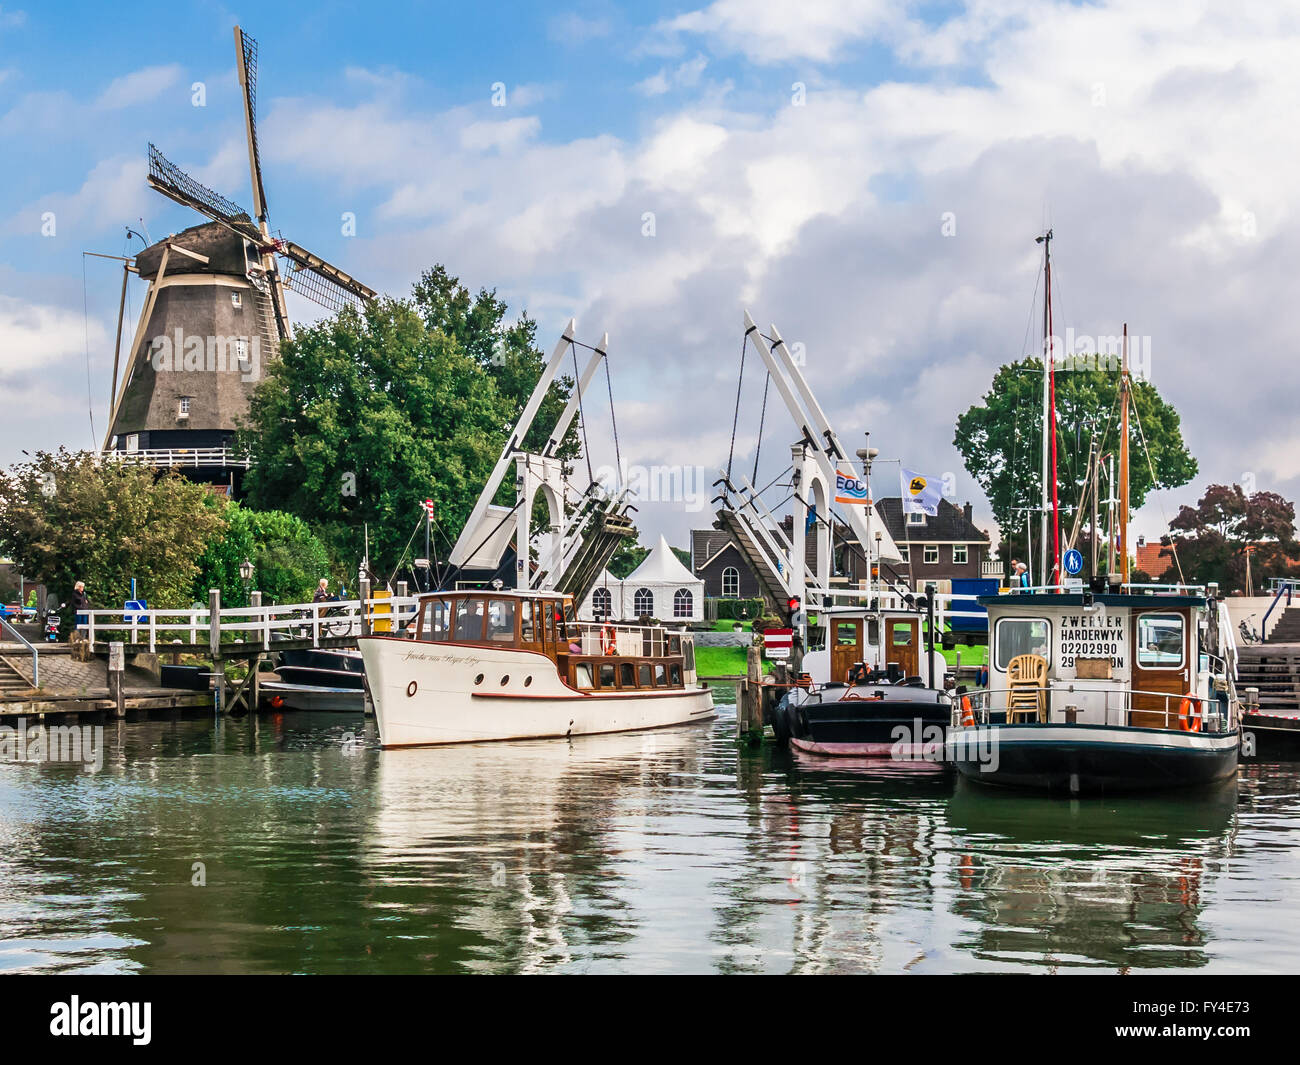 Windmill, bridge and boats in the harbour of Harderwijk in de province of Gelderland, Netherlands Stock Photo